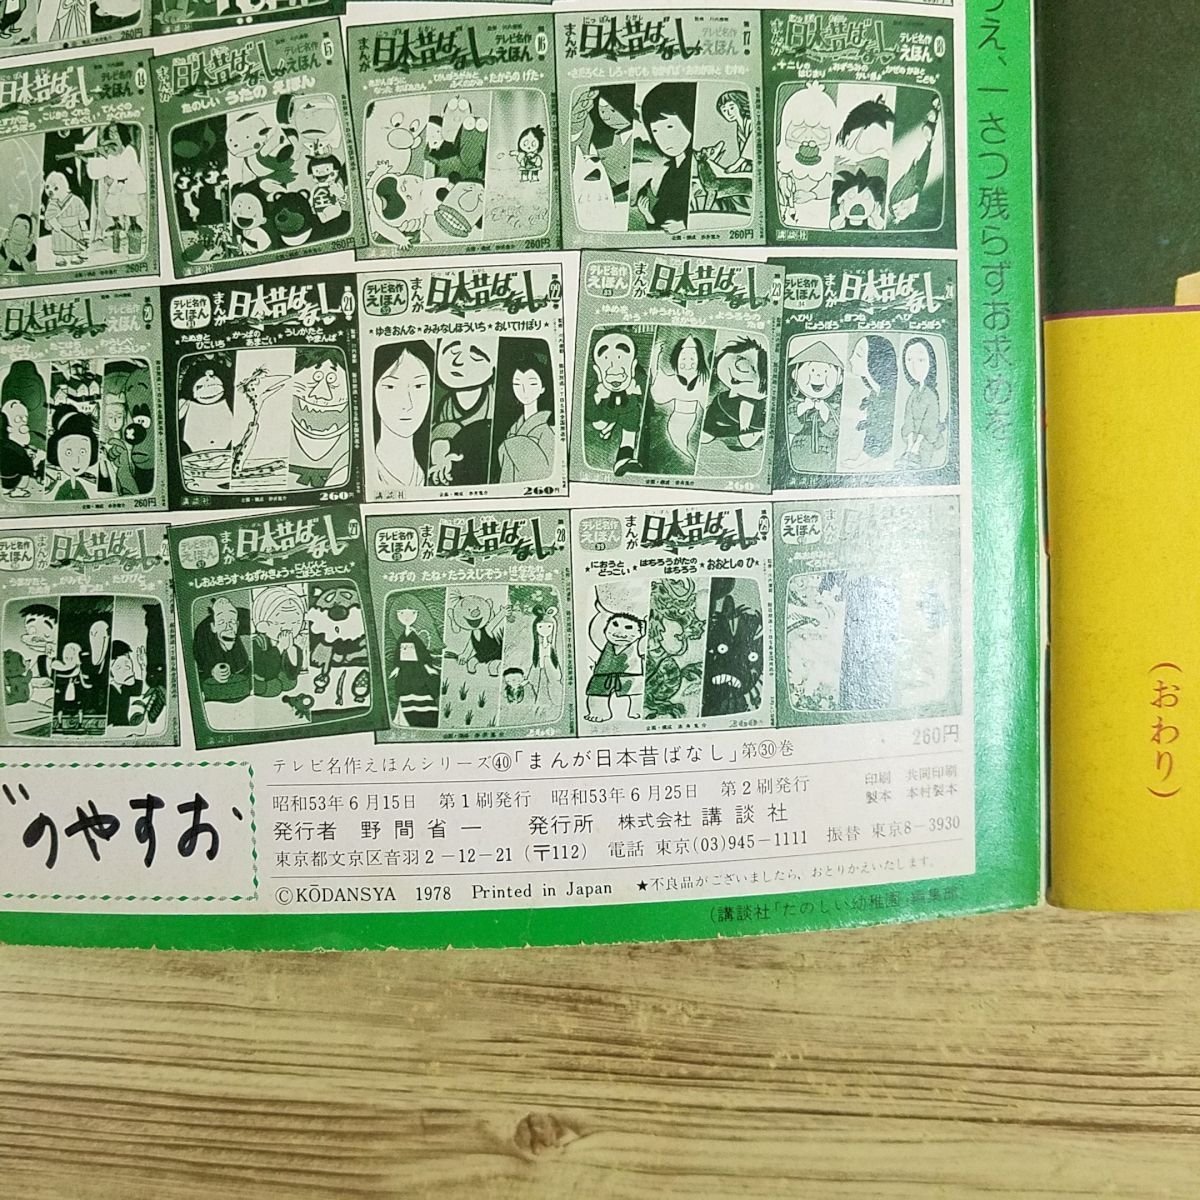  picture book [ tv masterpiece ...... Japan former times . none no. 30 volume .........|.... ..|... seems .] Showa Retro nostalgia anime [ postage 1